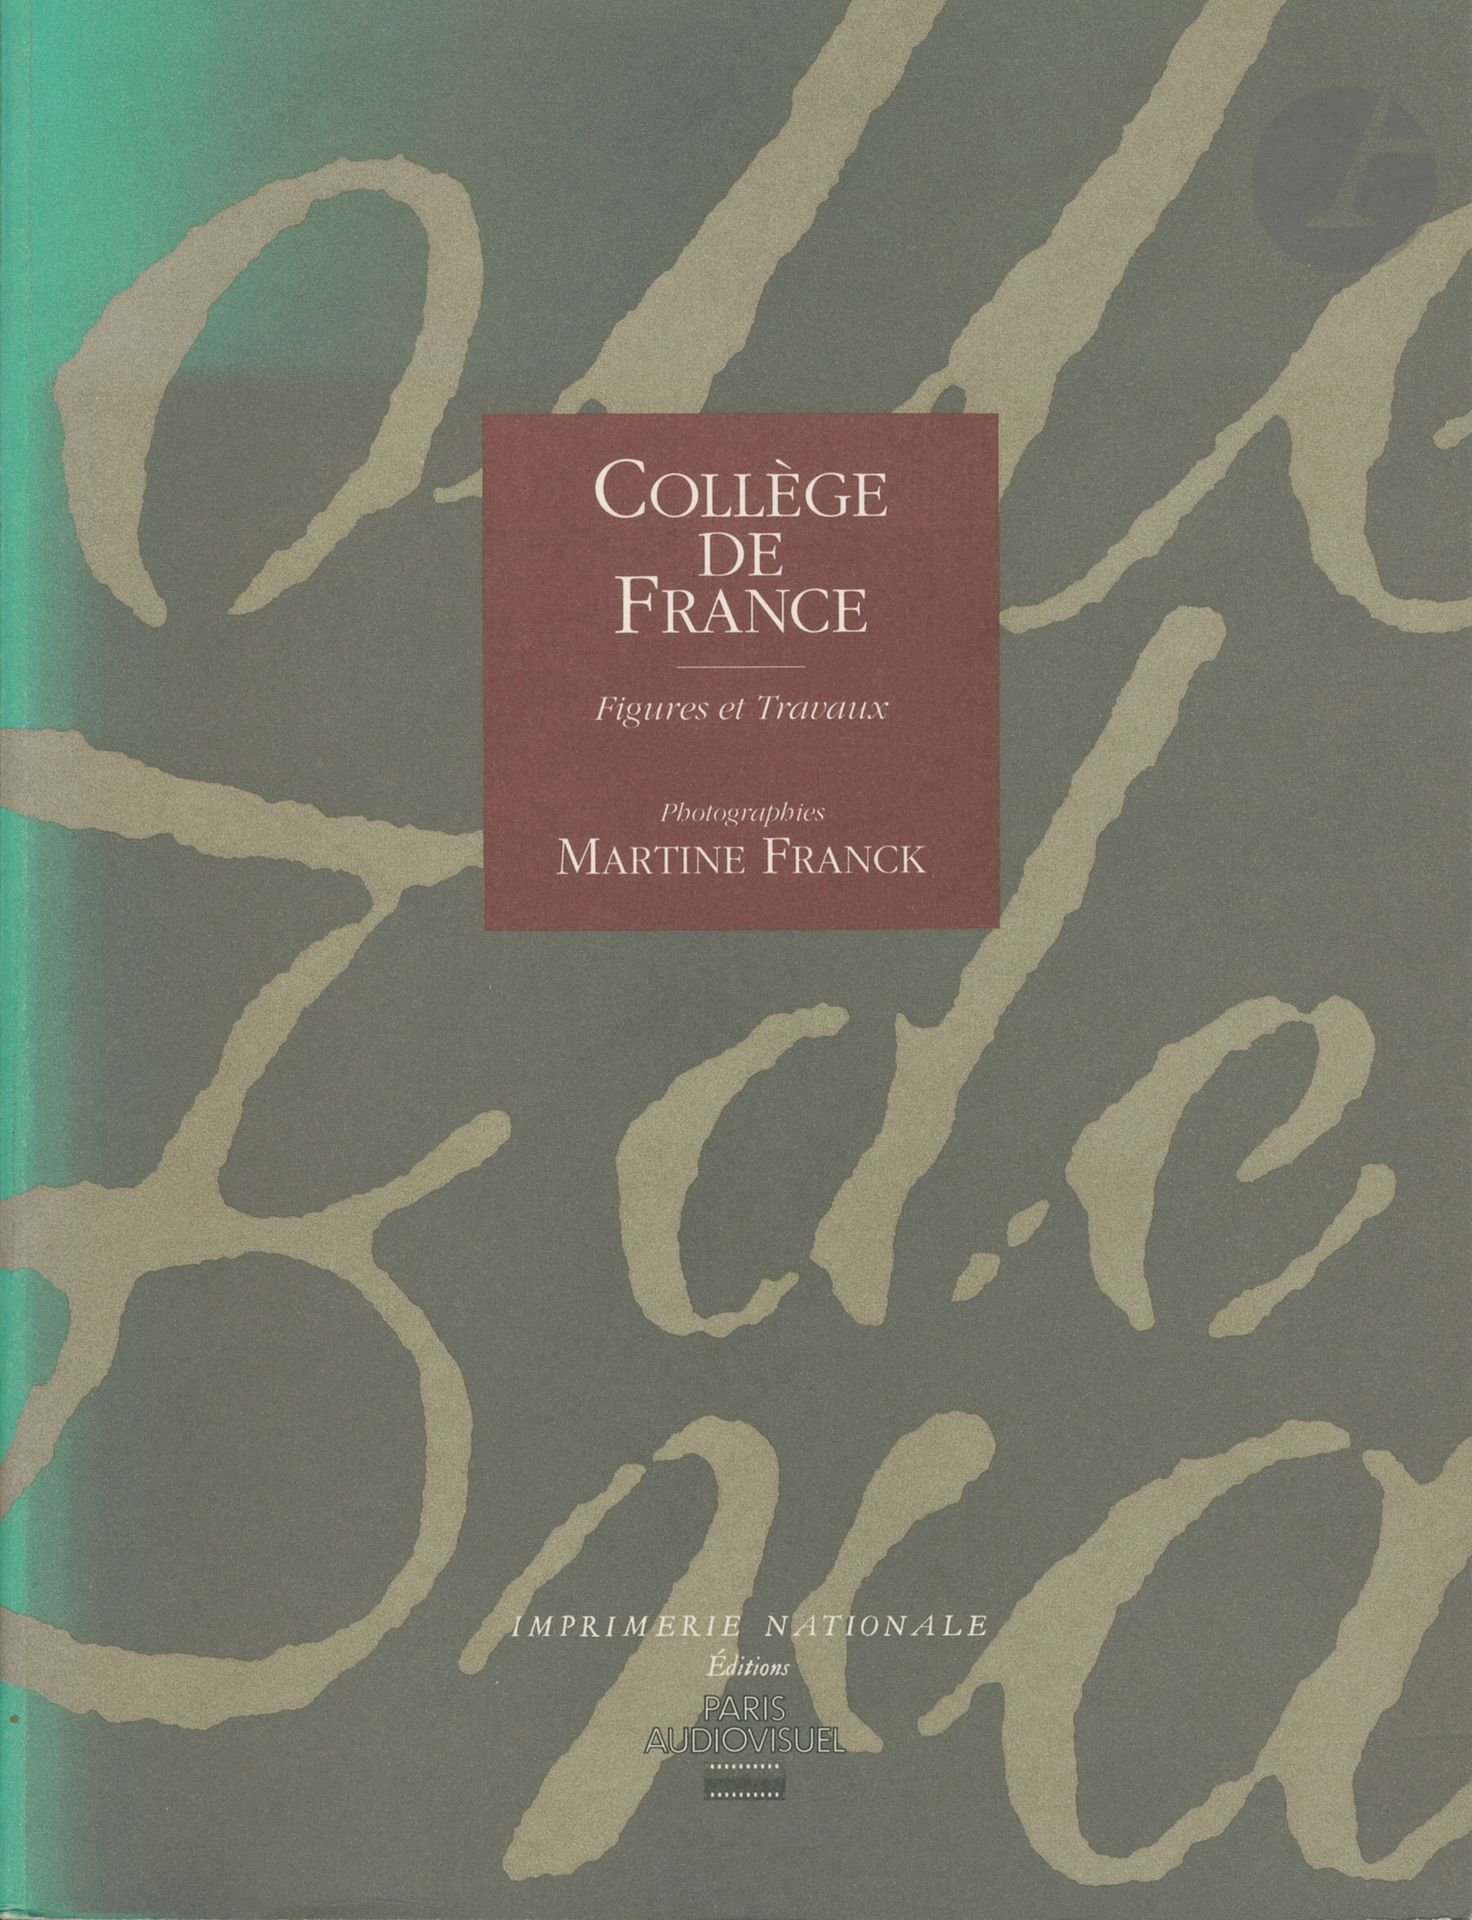 Null 弗朗克，玛蒂娜（1938-2012）[签名
]法兰西学院。数字和作品。
国家出版社，巴黎AudioVisuel，1995年，
四开本（30 x 23厘&hellip;